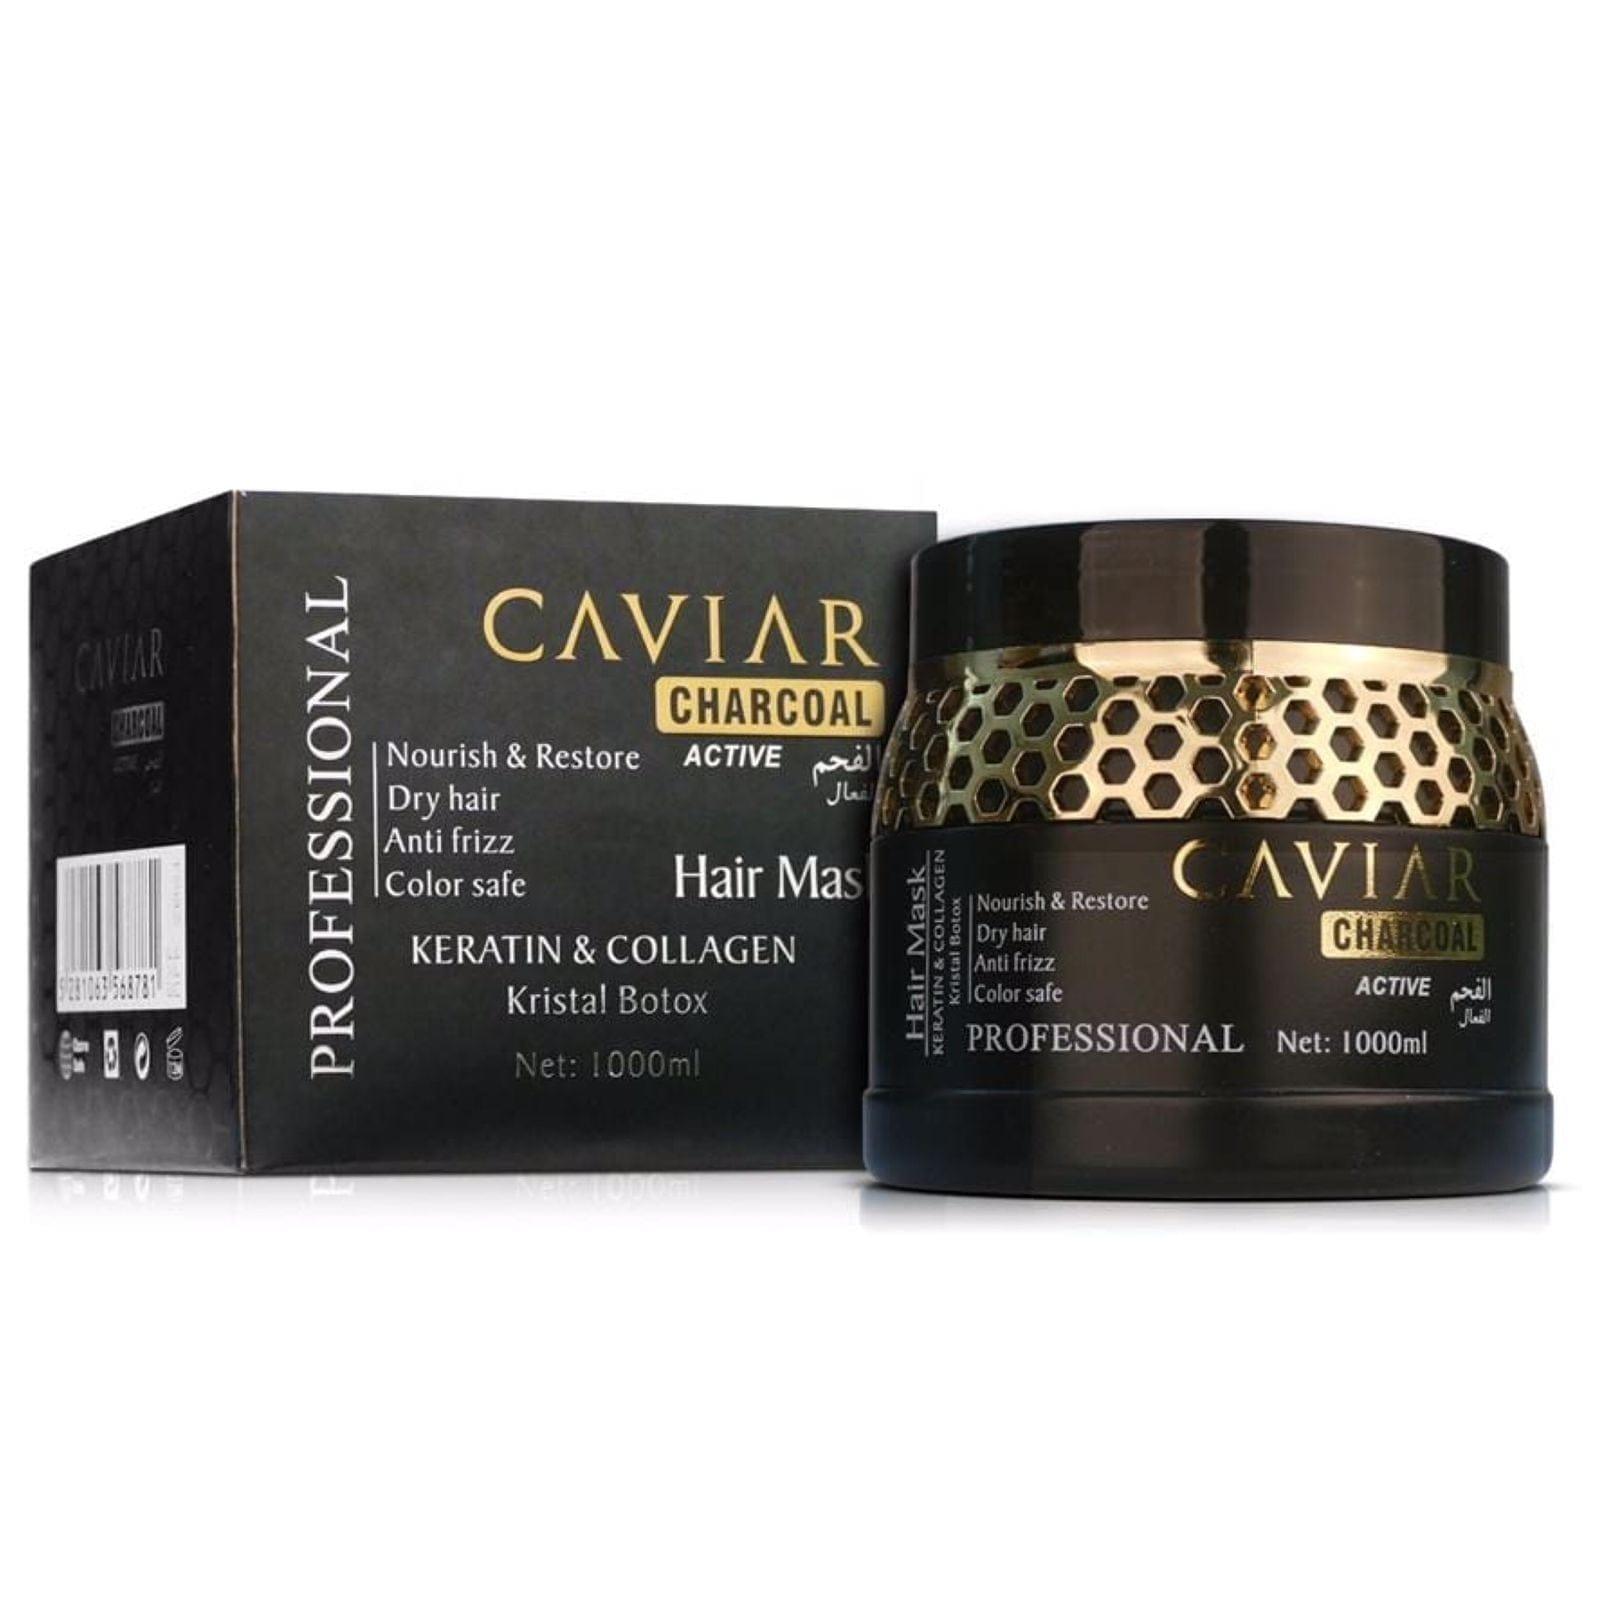 Caviar Charcoal Active Keratin & Collagen Hair Mask 1000ml